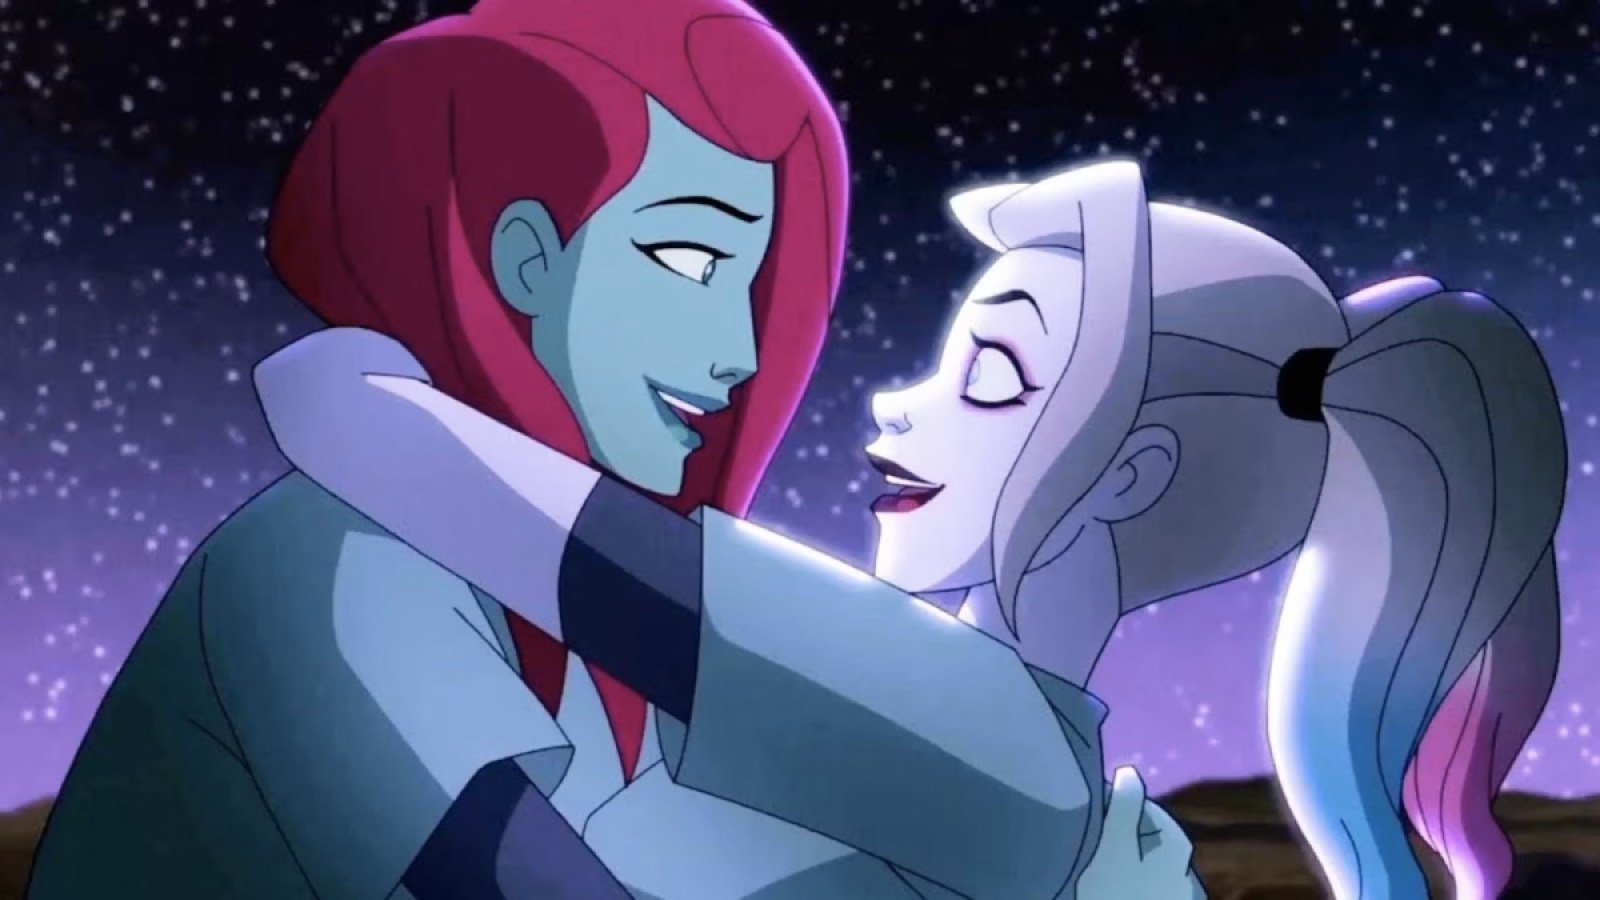 Harley and Ivy kiss in Harley Quinn season 3